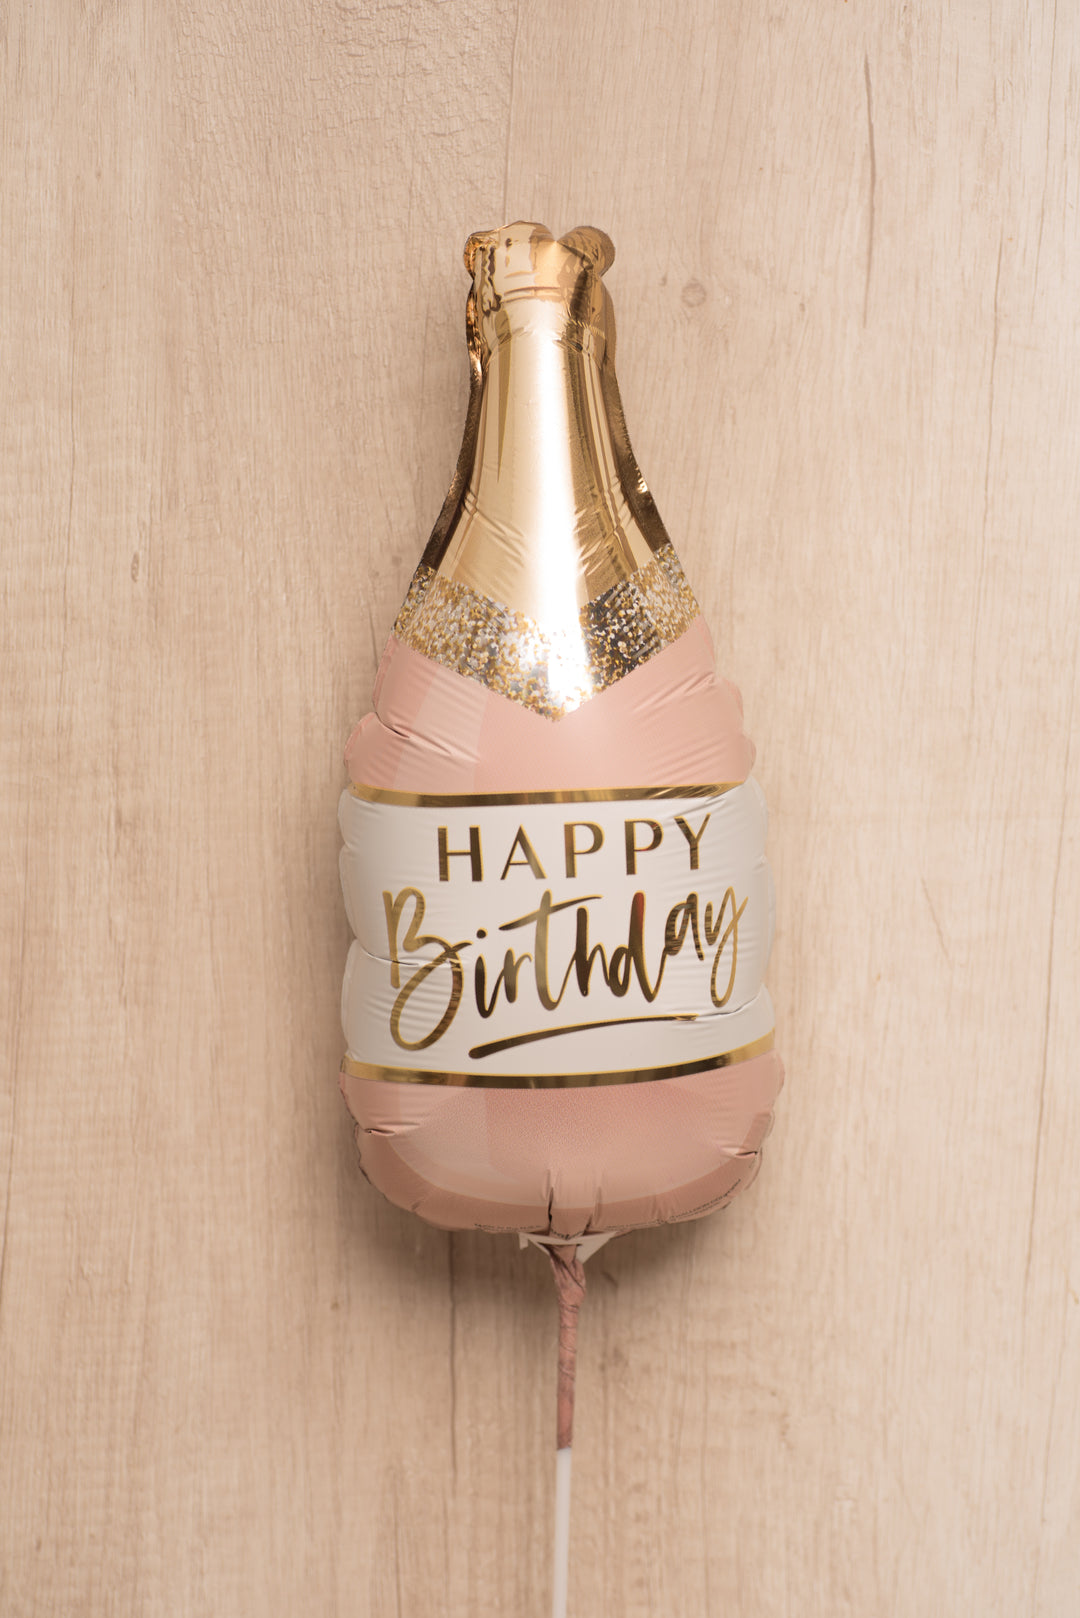 Globo "Happy birthday" Champagne